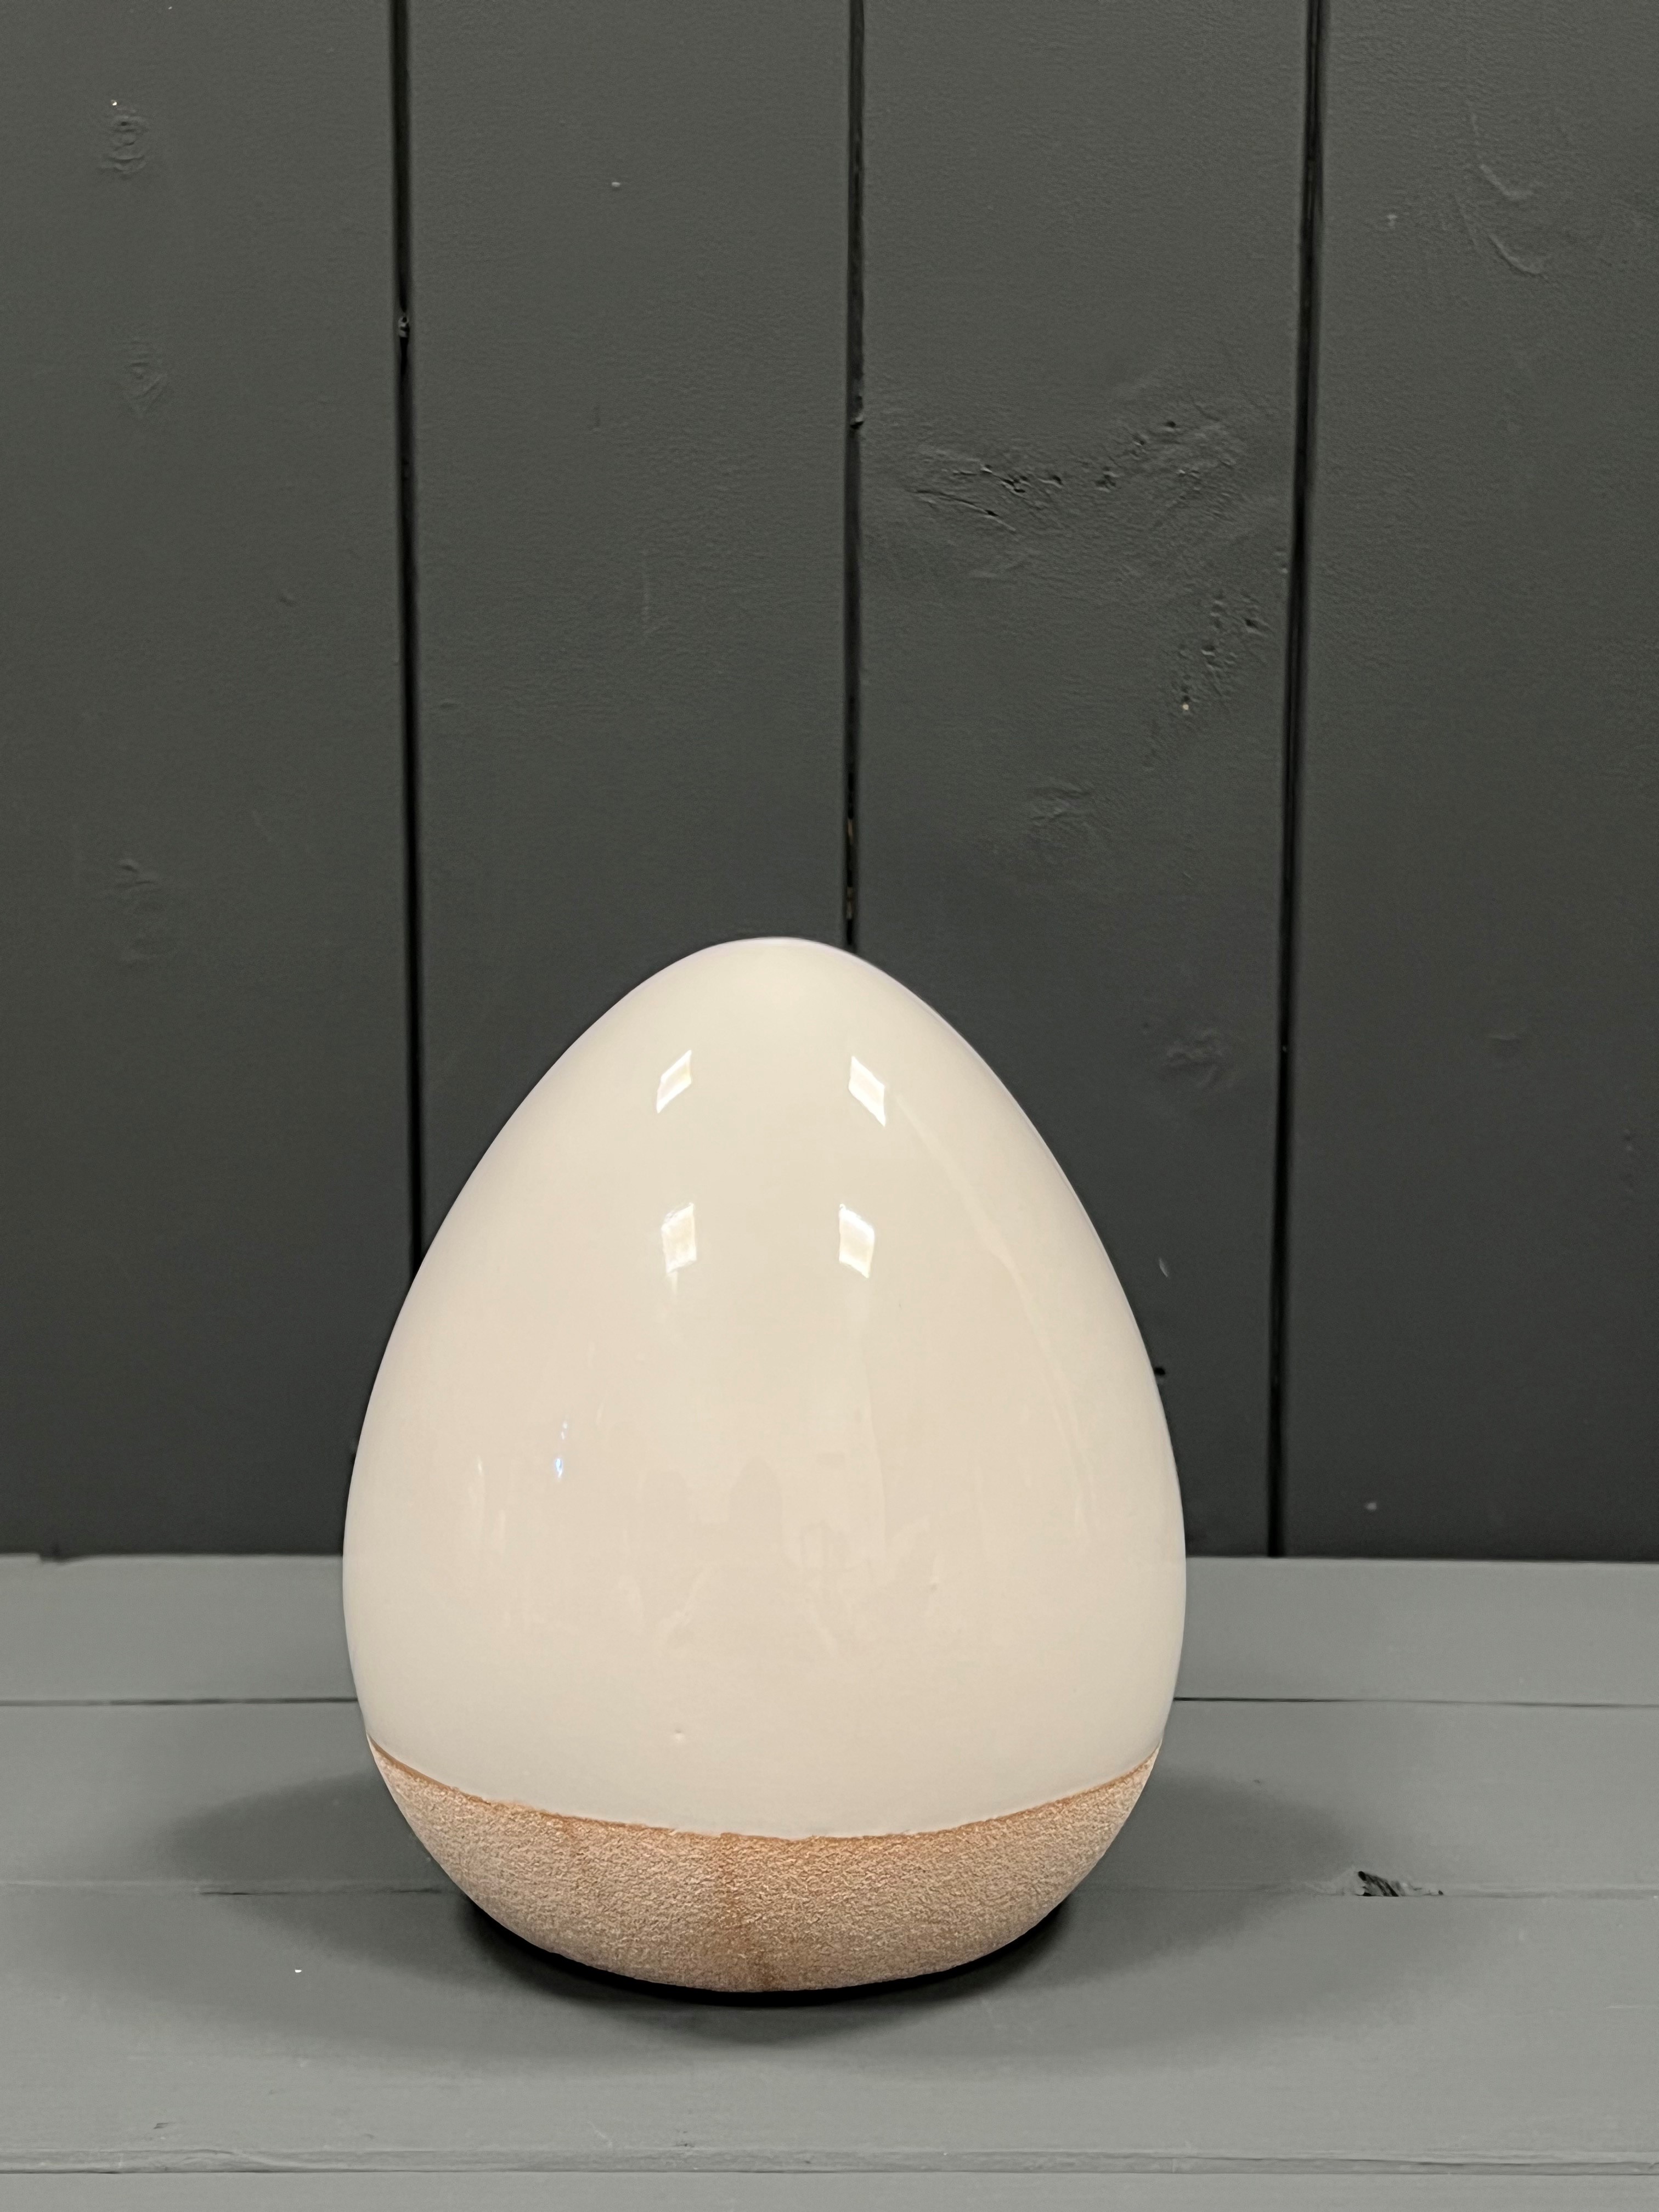 Medium Ceramic White Egg with Sand Base detail page